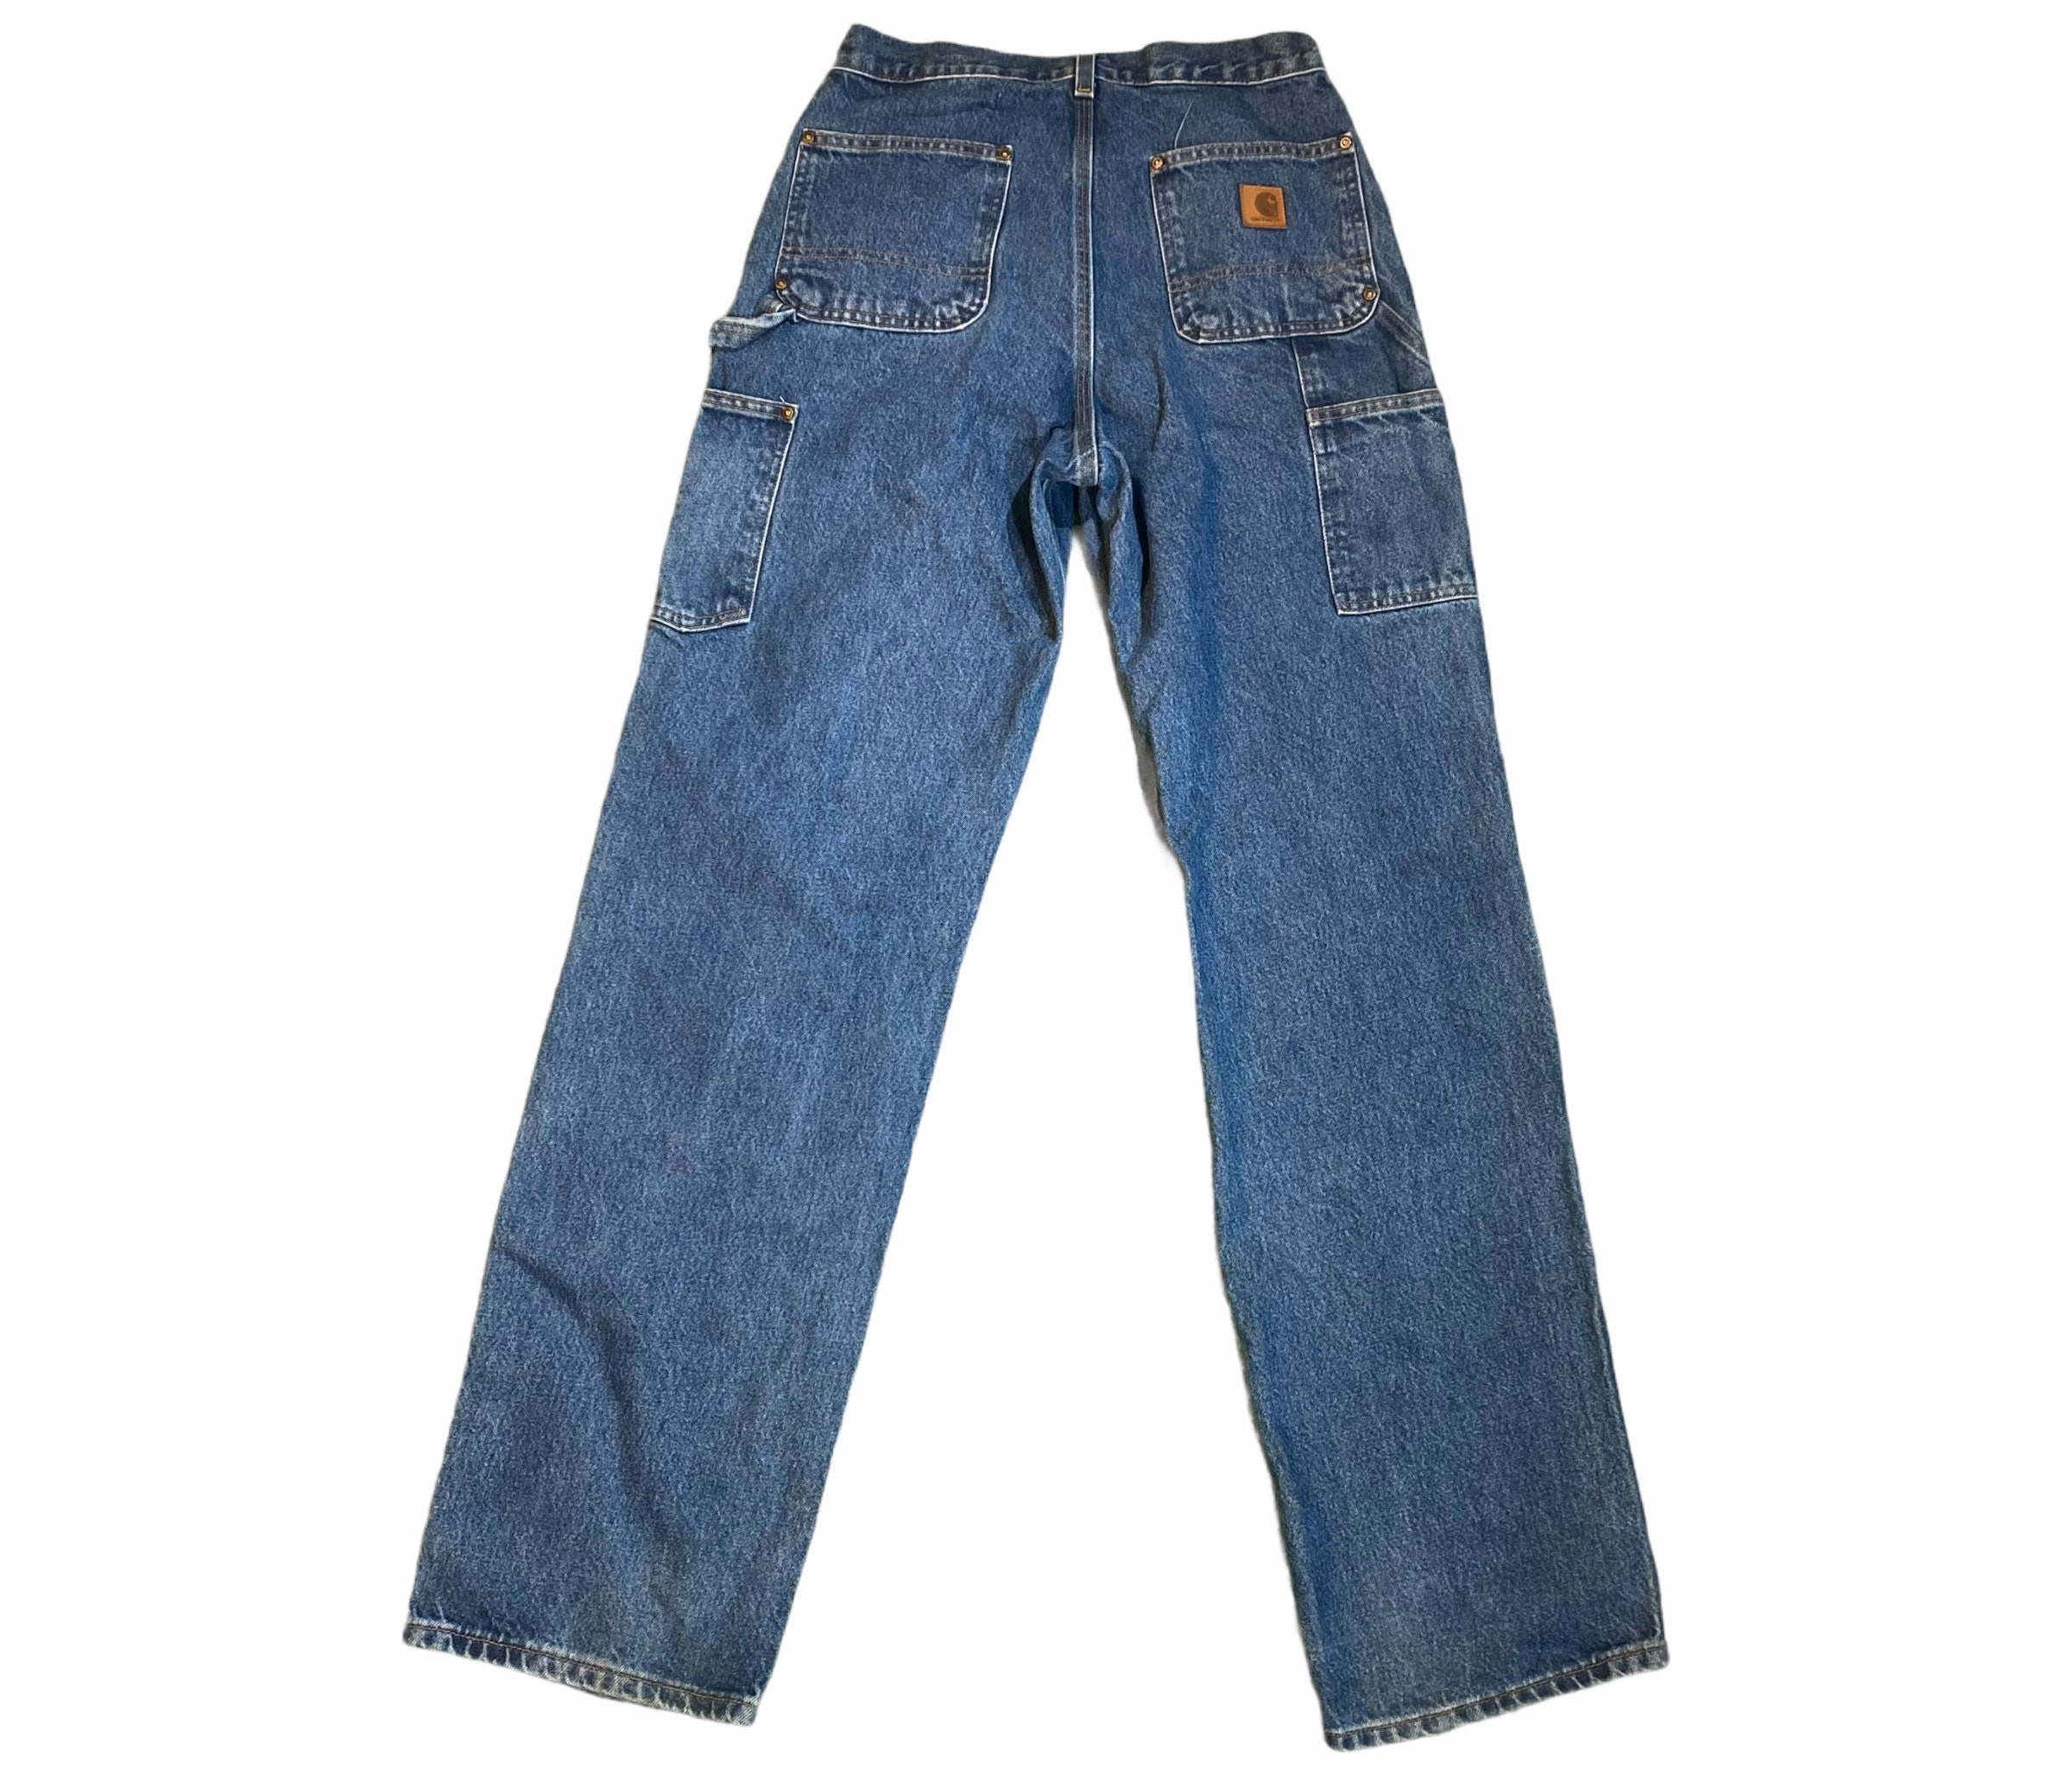 Vintage Carhartt Double Knee 30x34 Denim Jeans Workwear Pants | Etsy